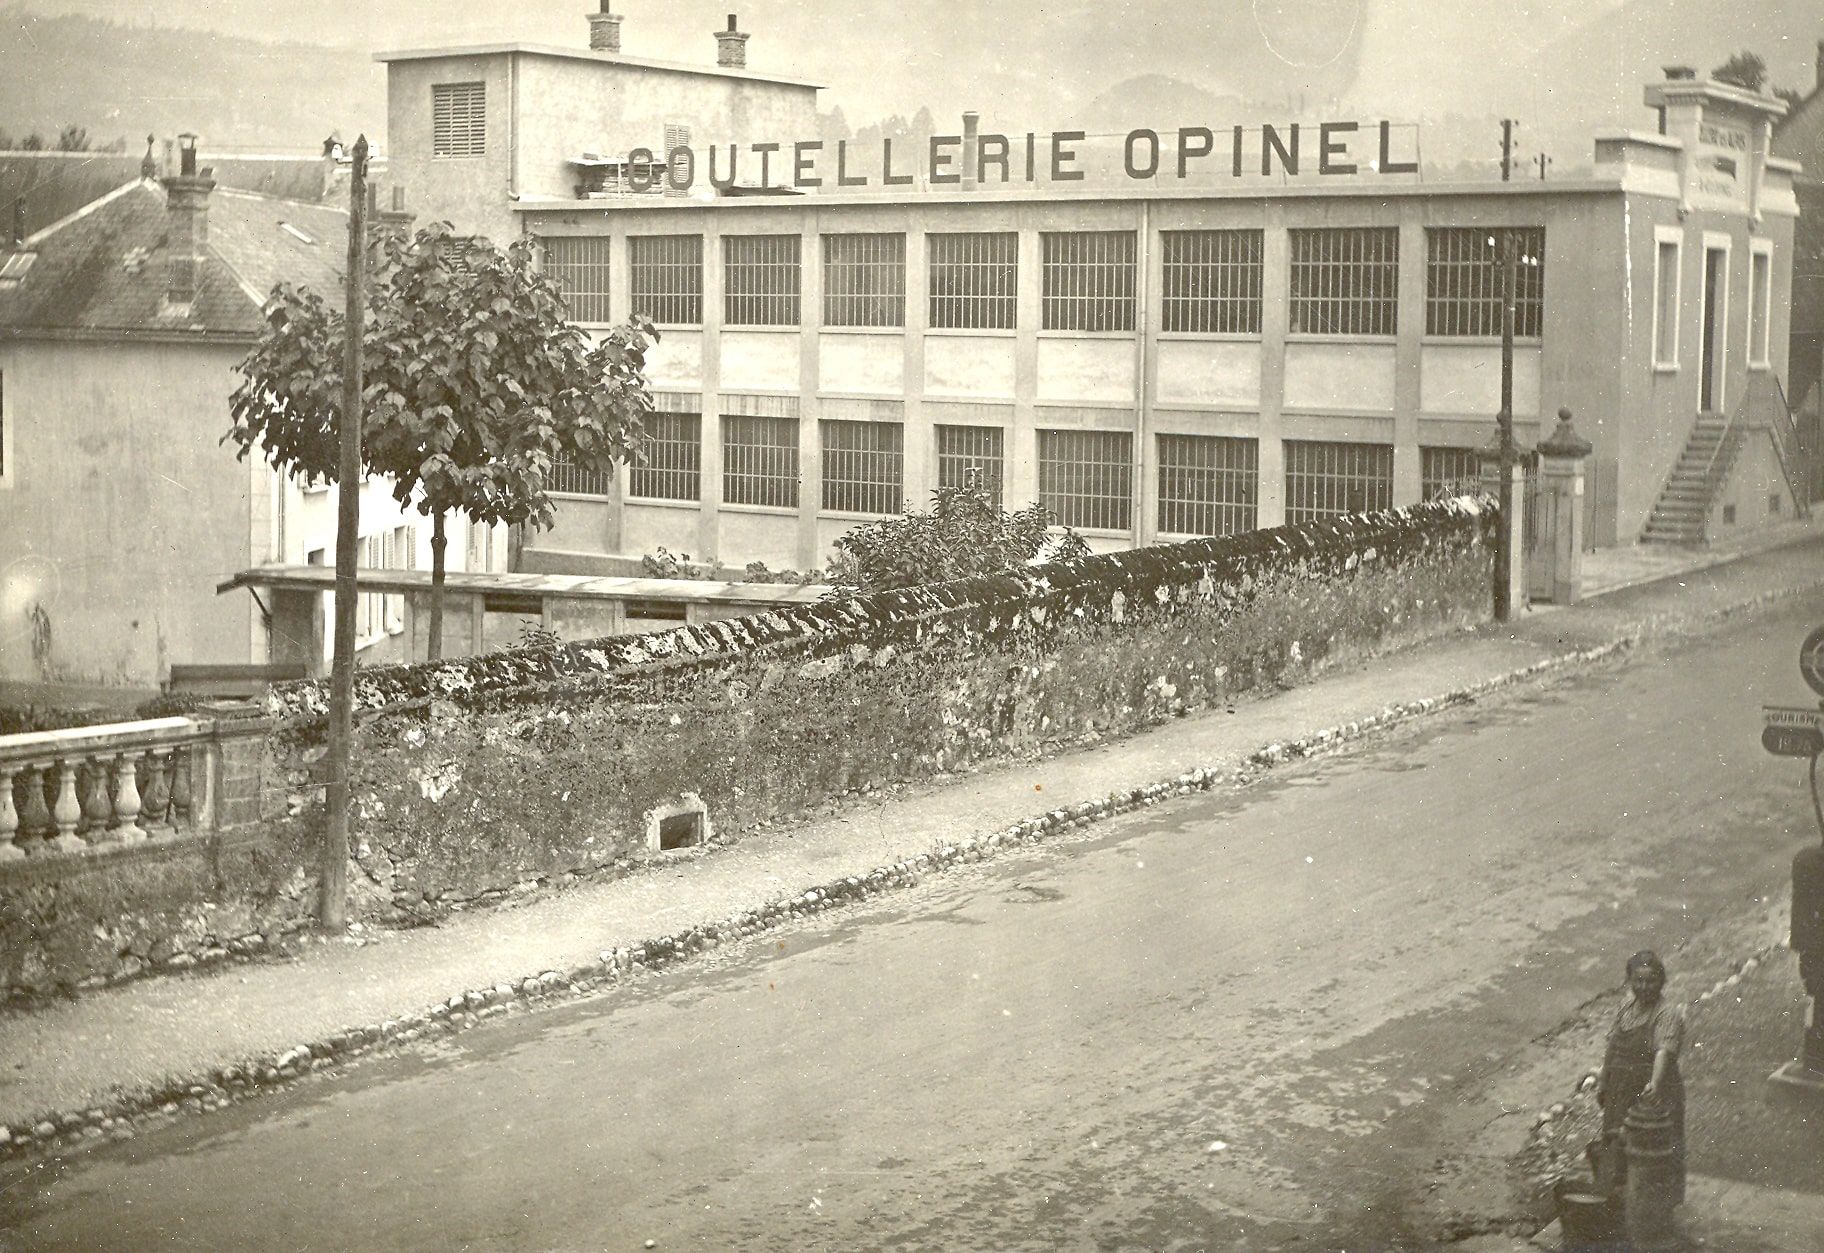 Opinel factory